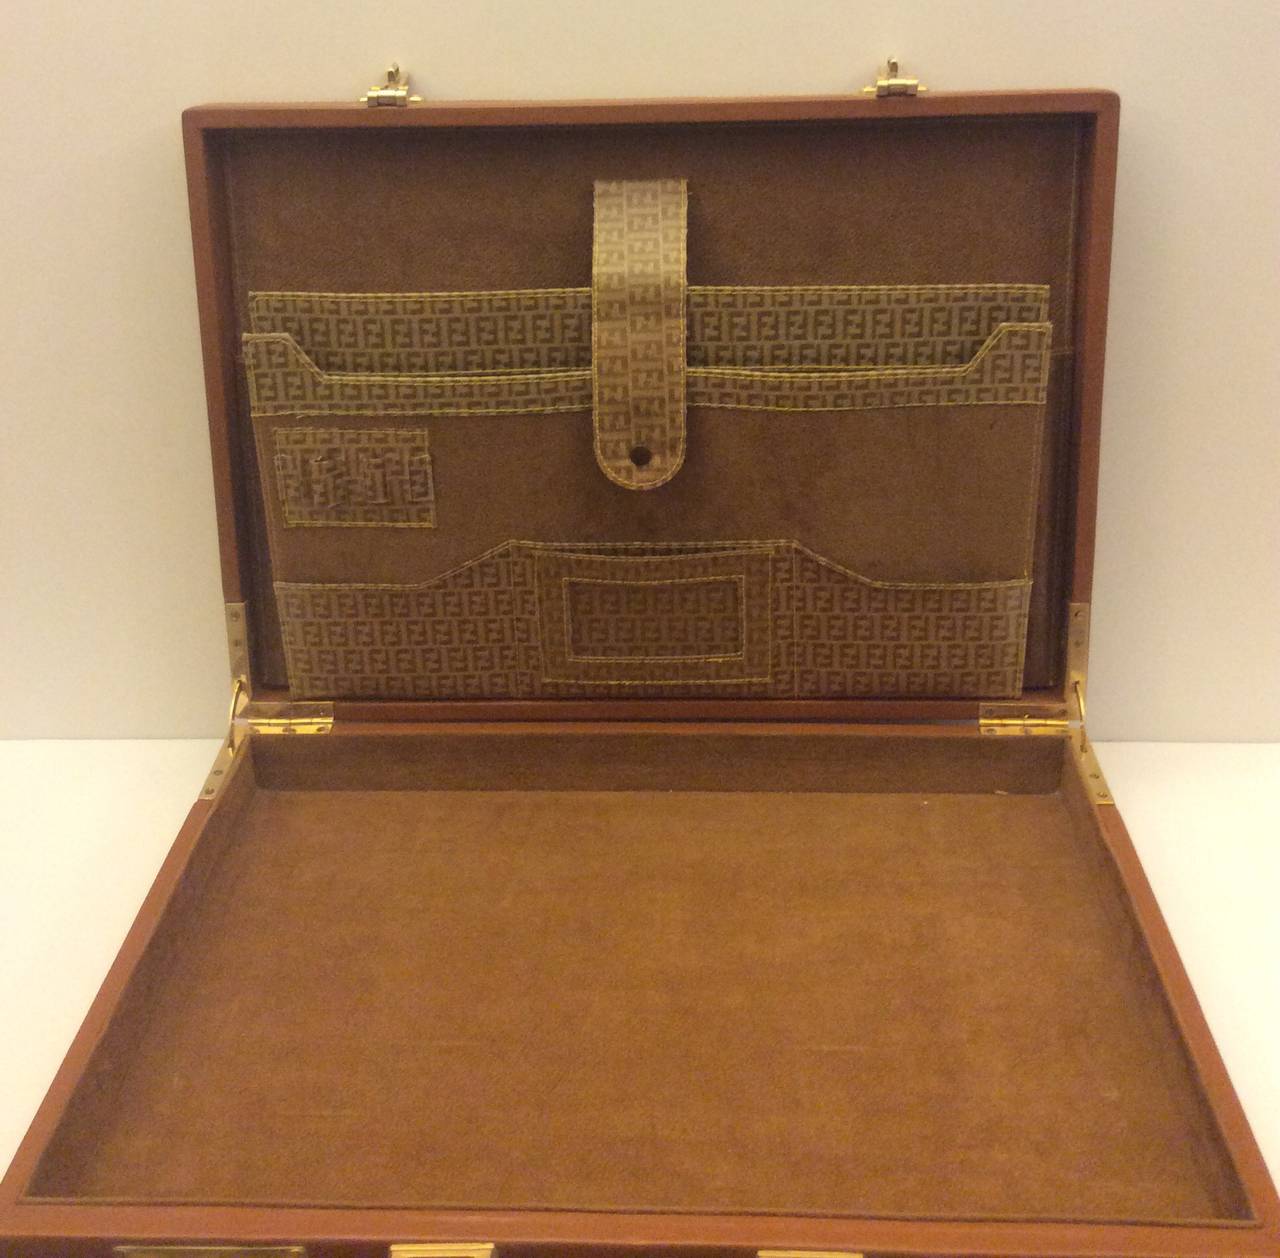 This is a rare vintage Fendi monogram briefcase
Measurements:
17